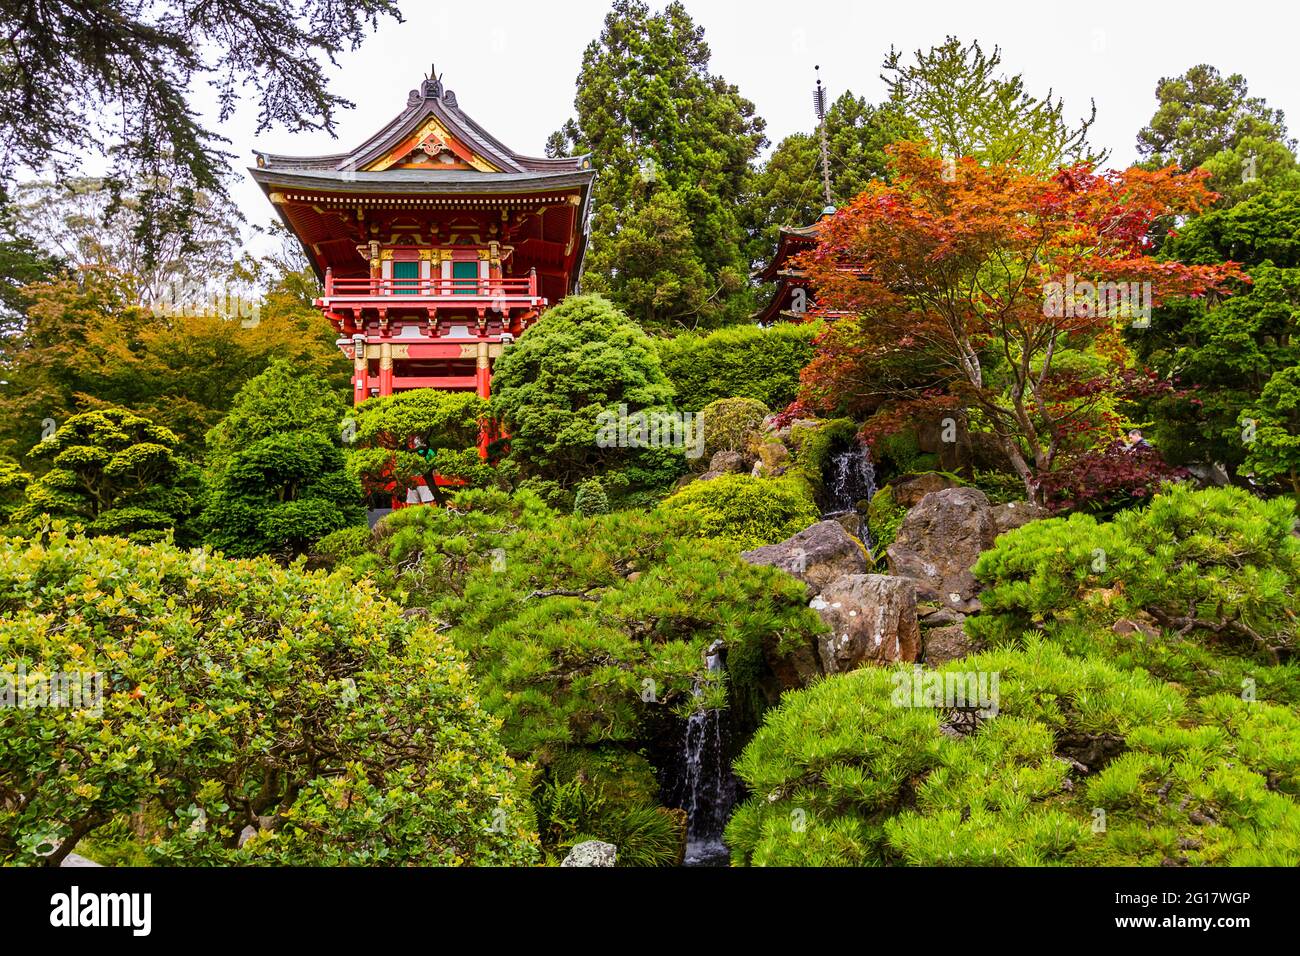 Red Buddhist temple in Japanese Tea Garden (Golden Gate Park) Stock Photo